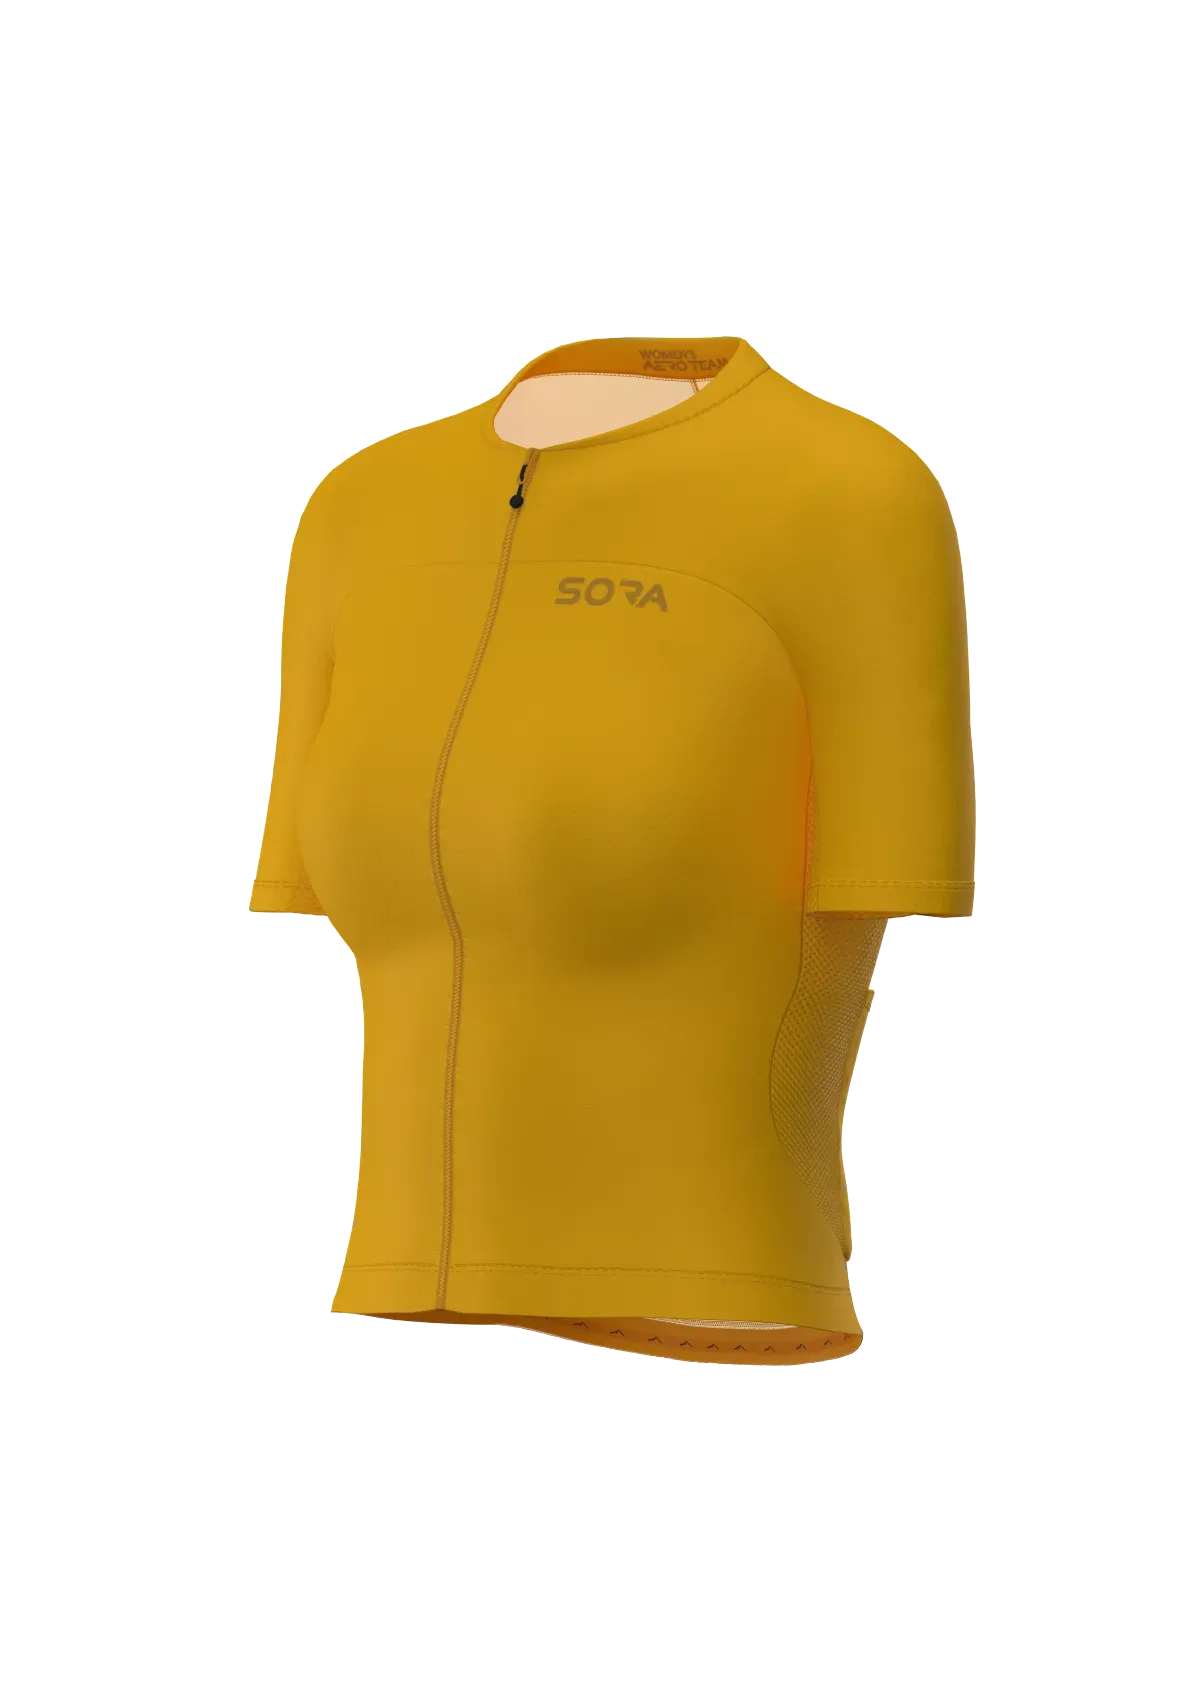 Yellow Aero Team Women's Cycling Jersey